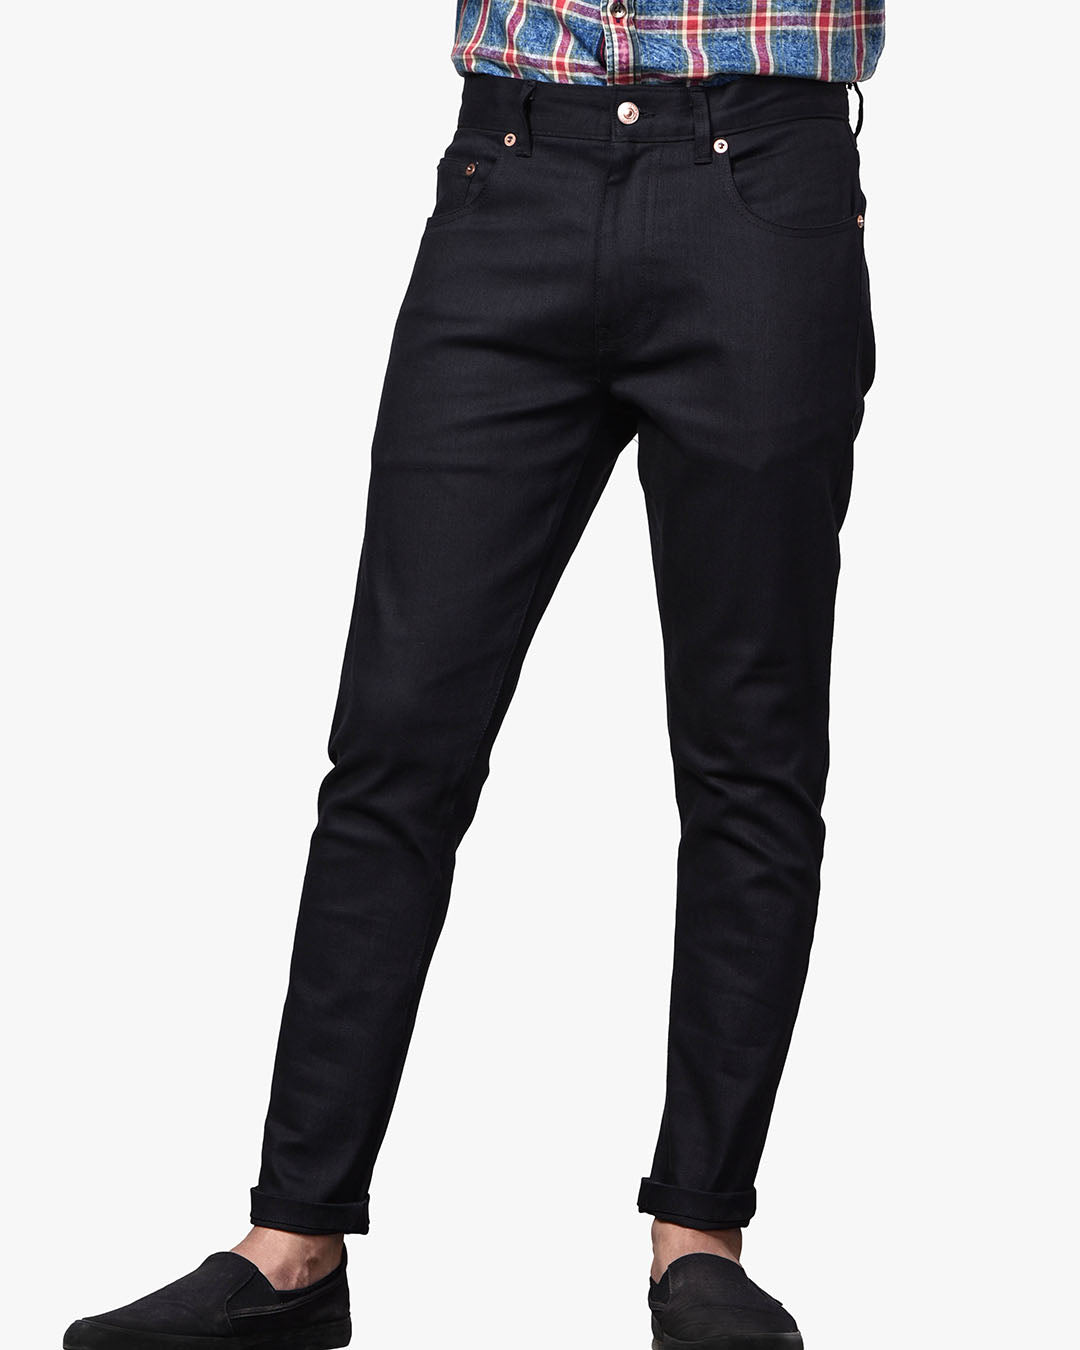 Model wearing stretch jeans for men by Luxire in black 2